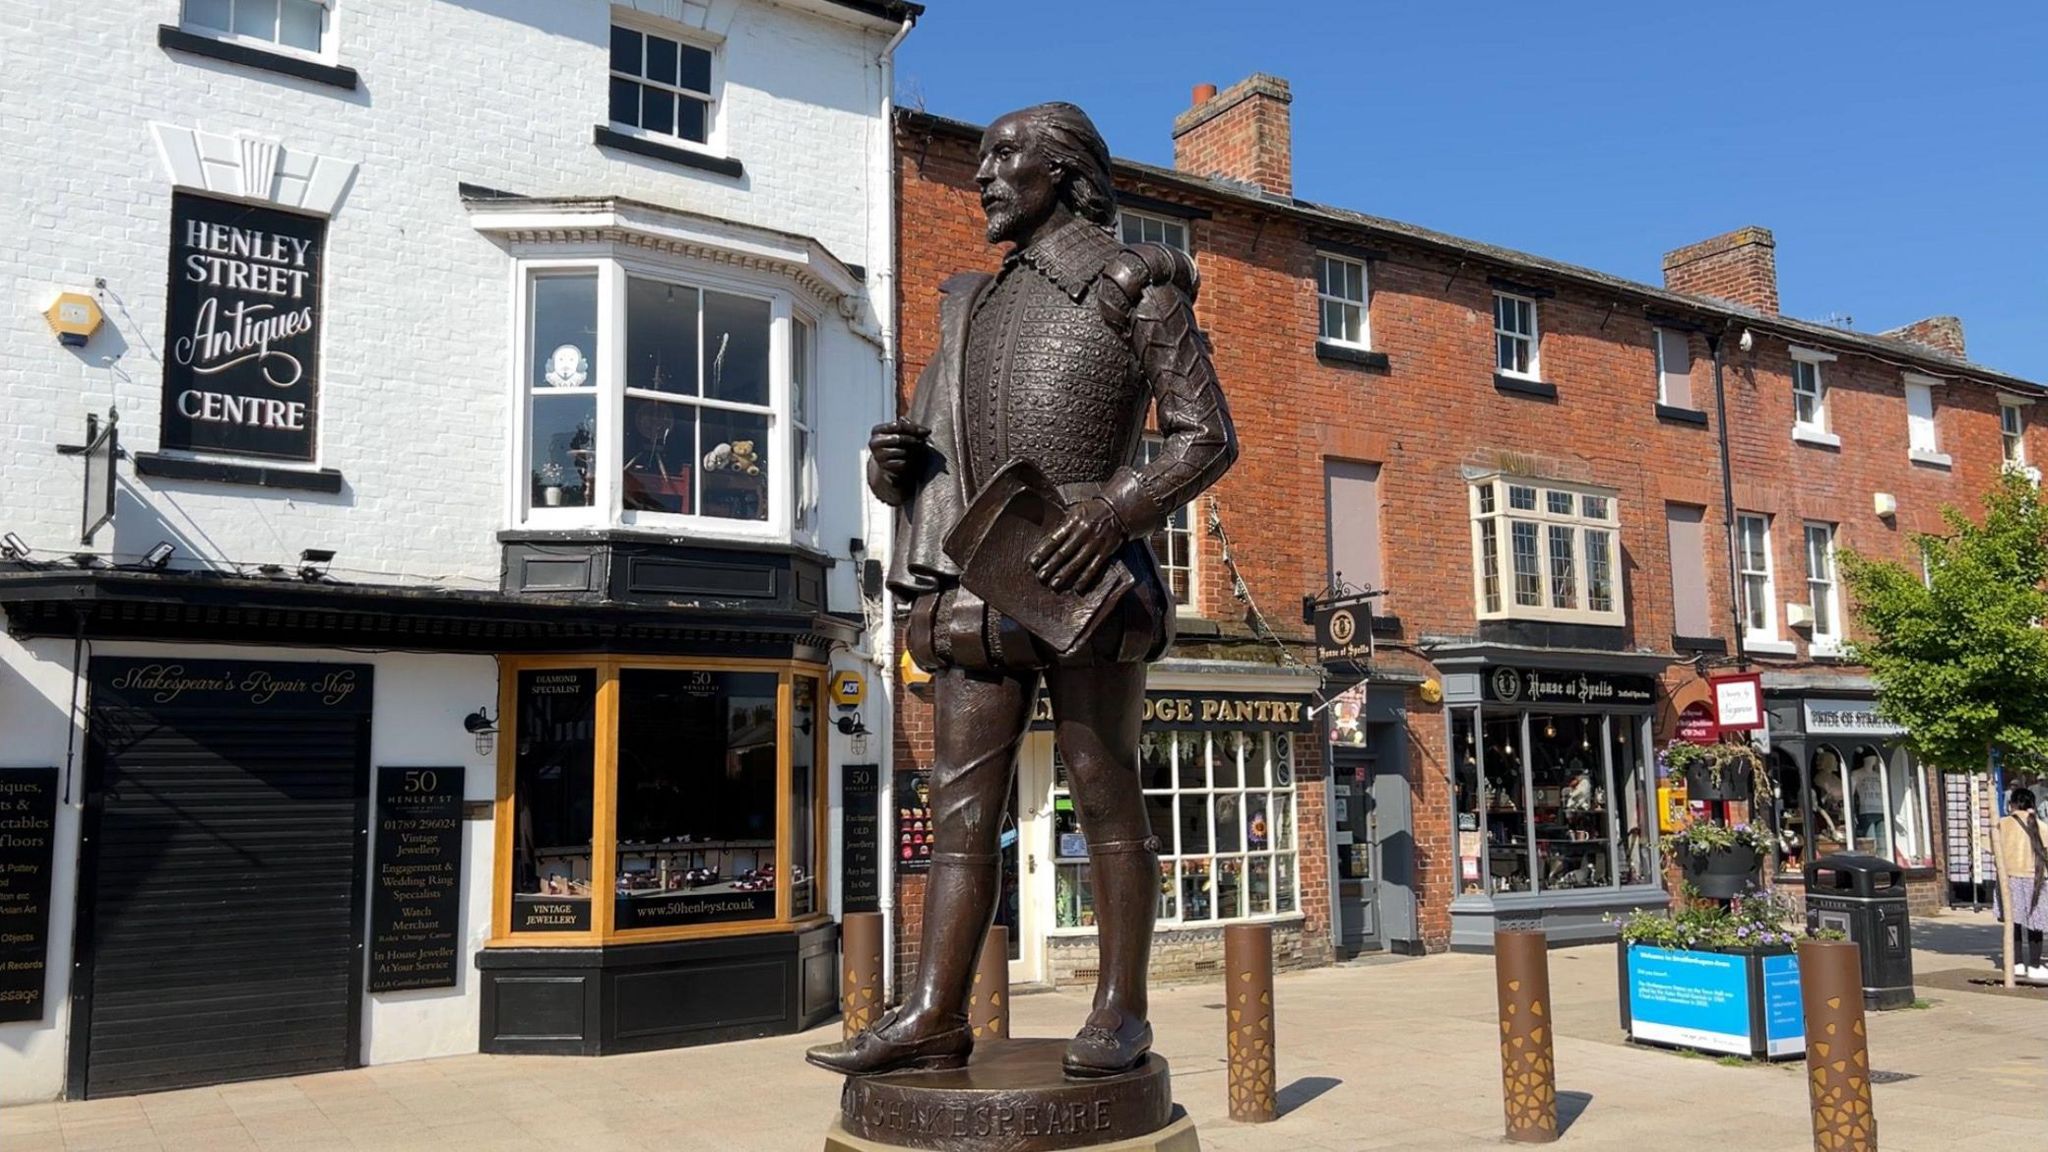 A statue of William Shakespeare